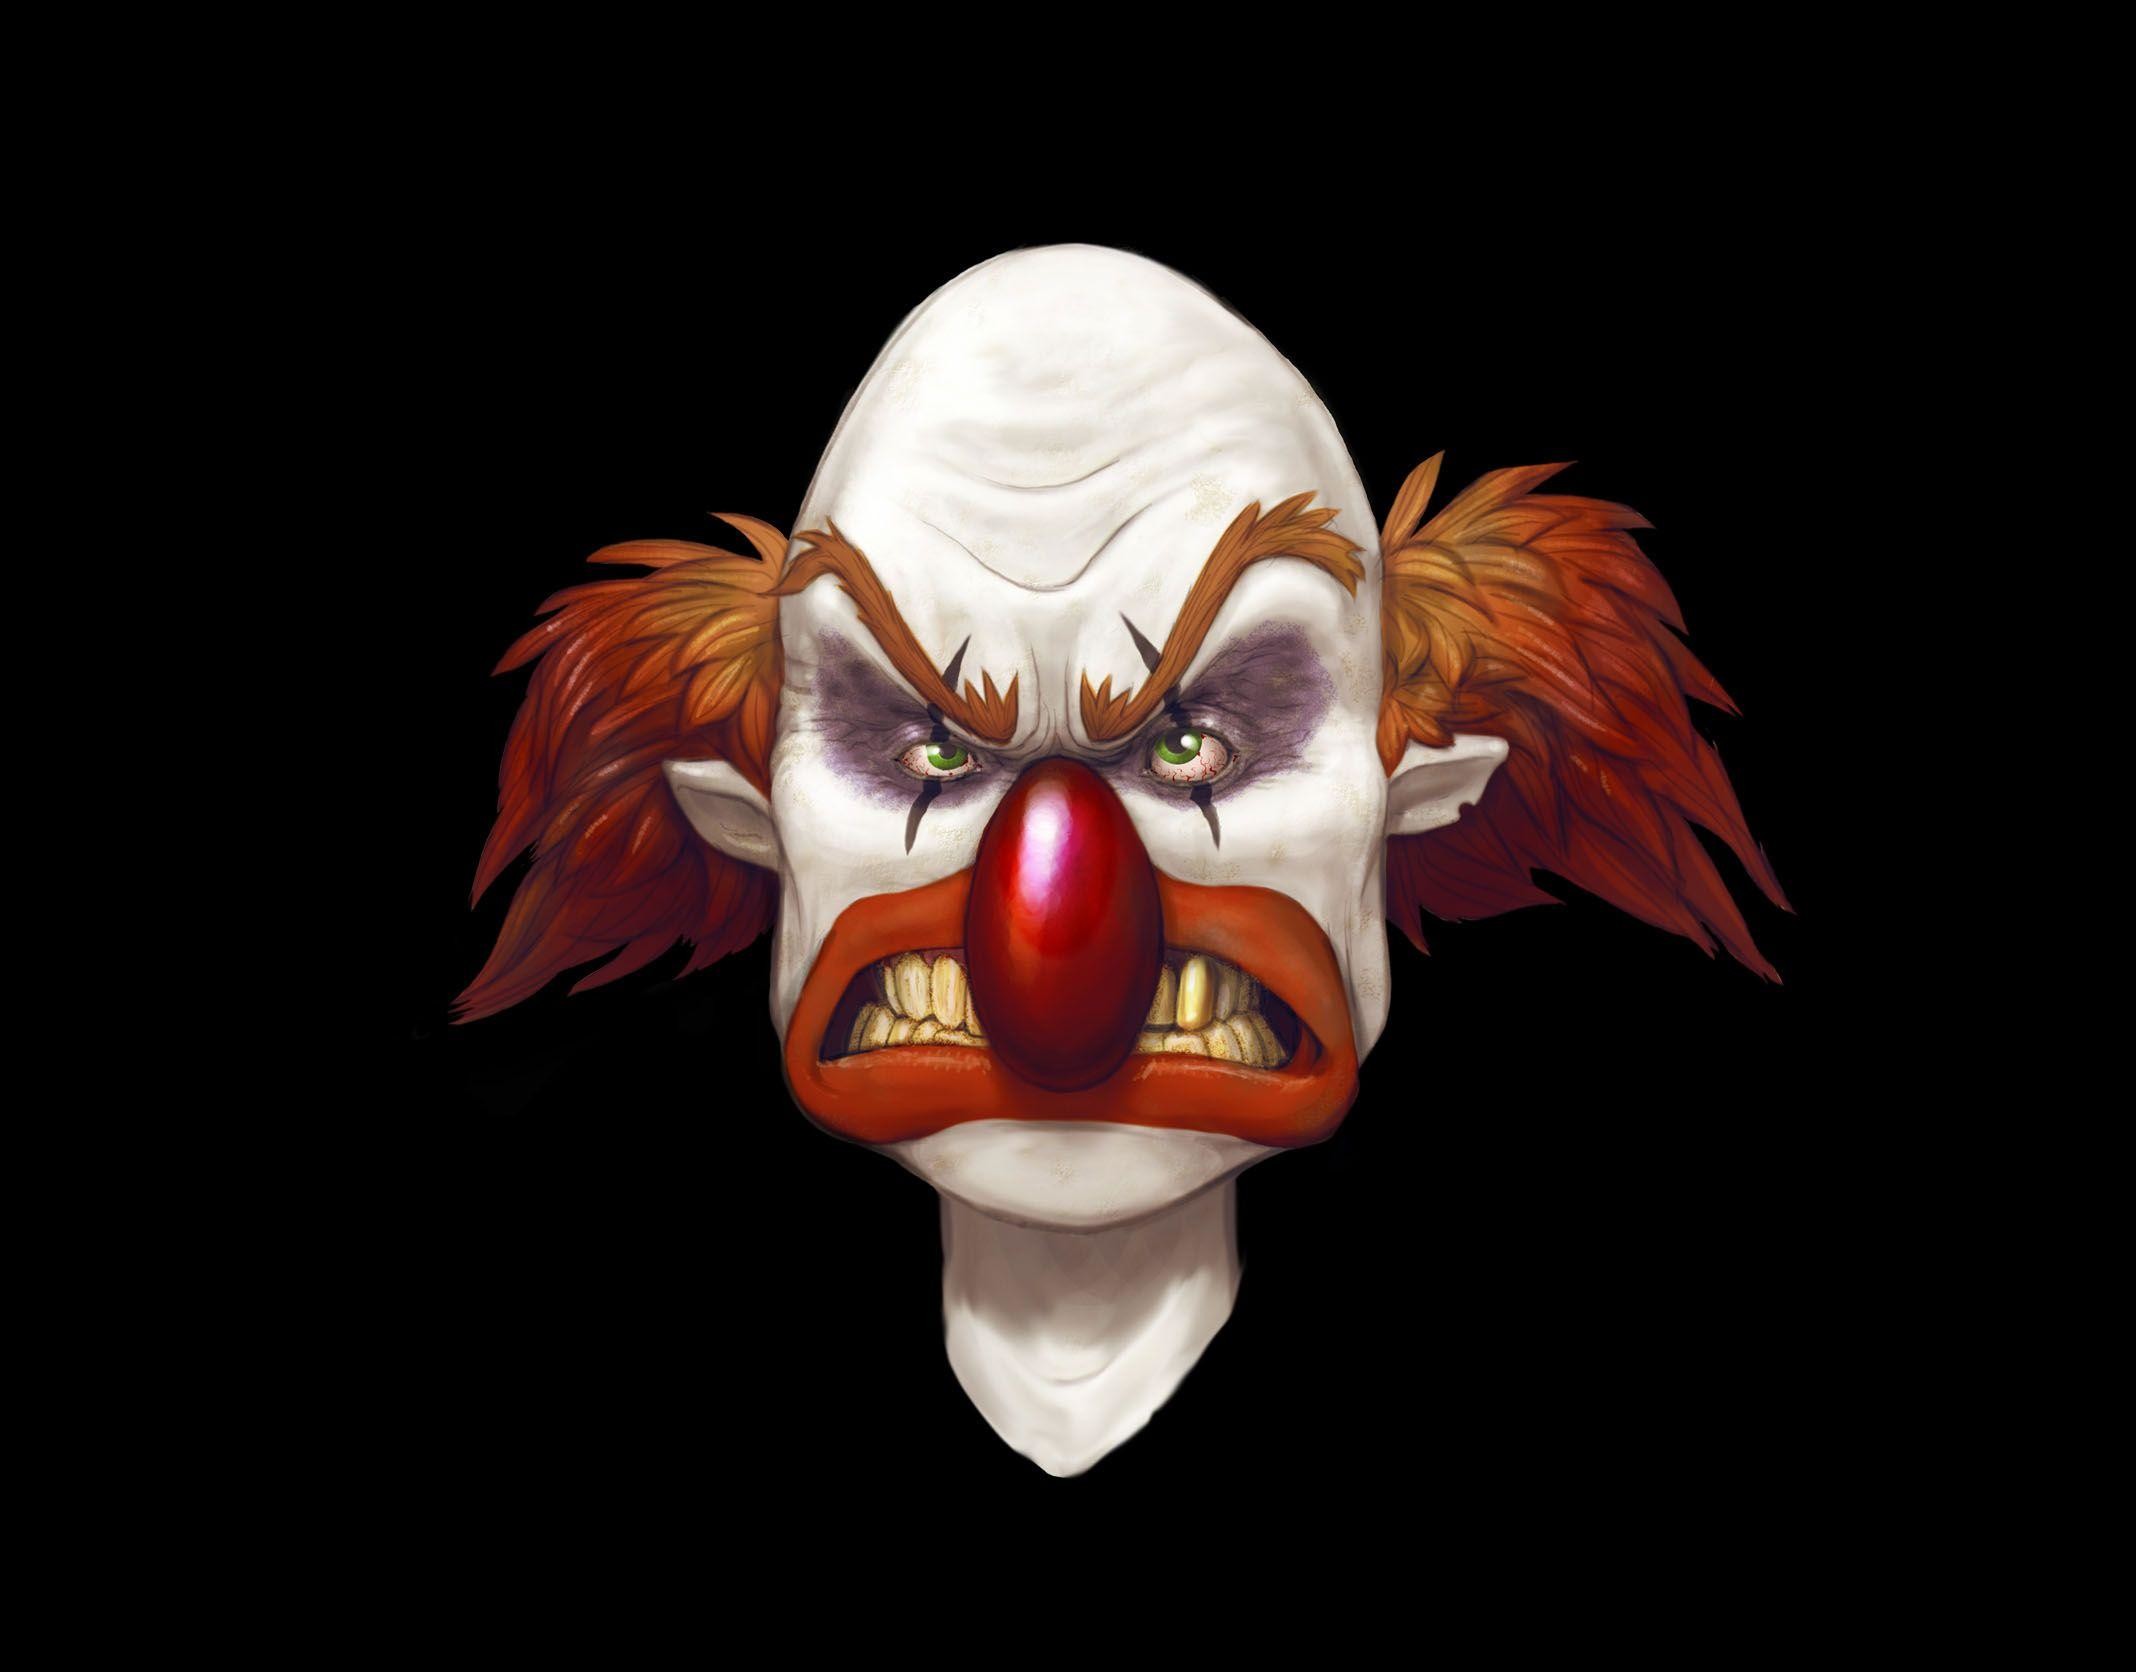 2136x1672 Images For > Evil Clown Wallpaper Hd